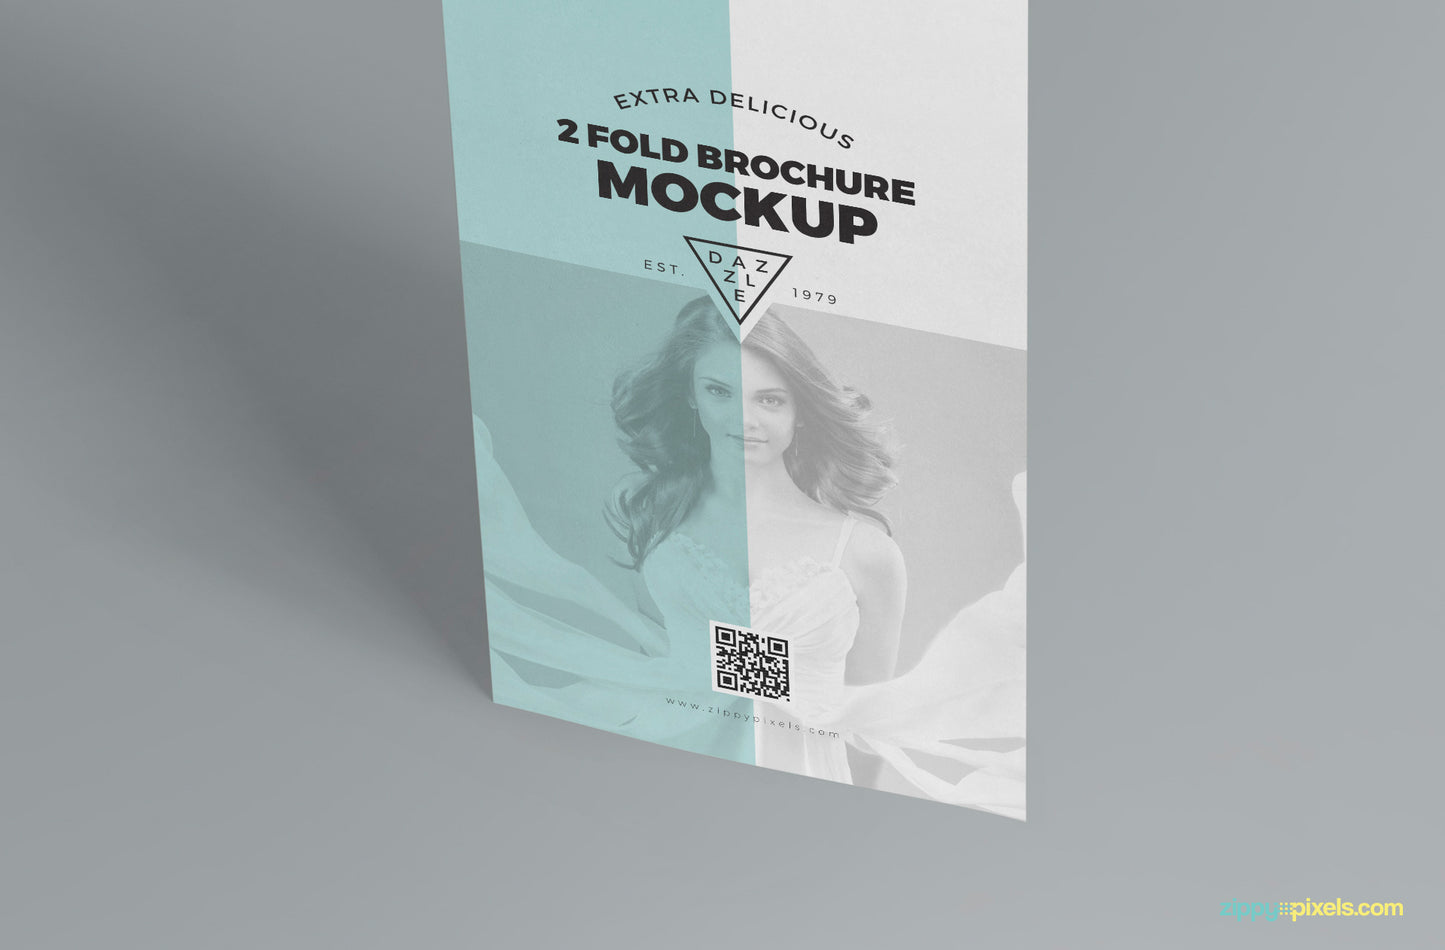 Free Slick 2 Fold Brochure Mockup PSD